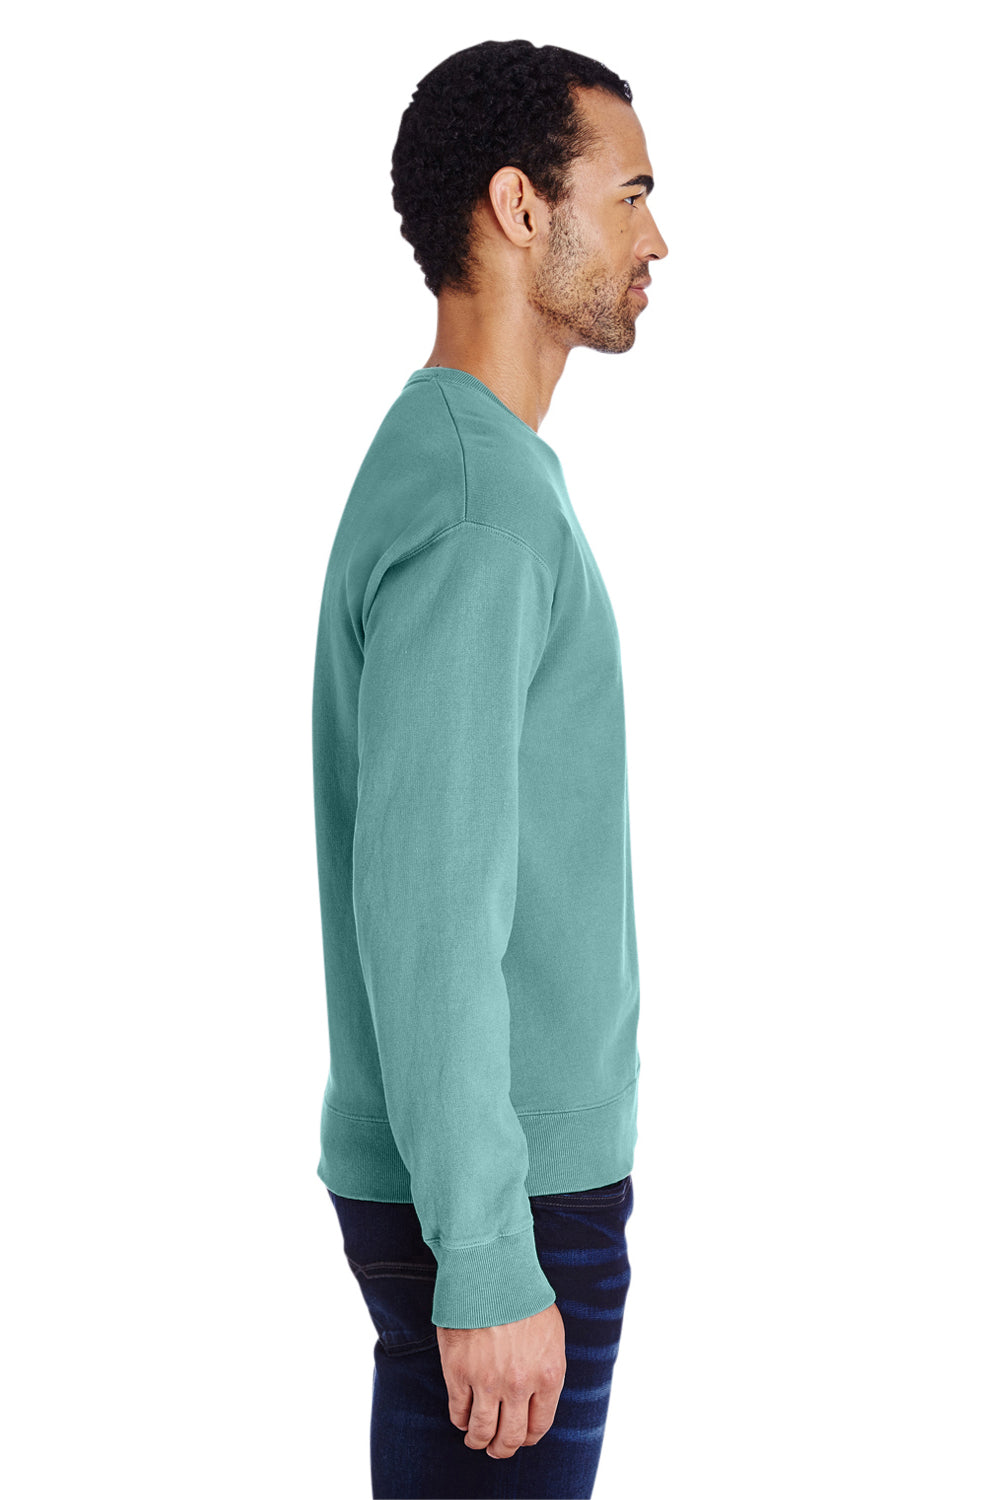 ComfortWash by Hanes GDH400 Crewneck Sweatshirt Spanish Moss Green Side